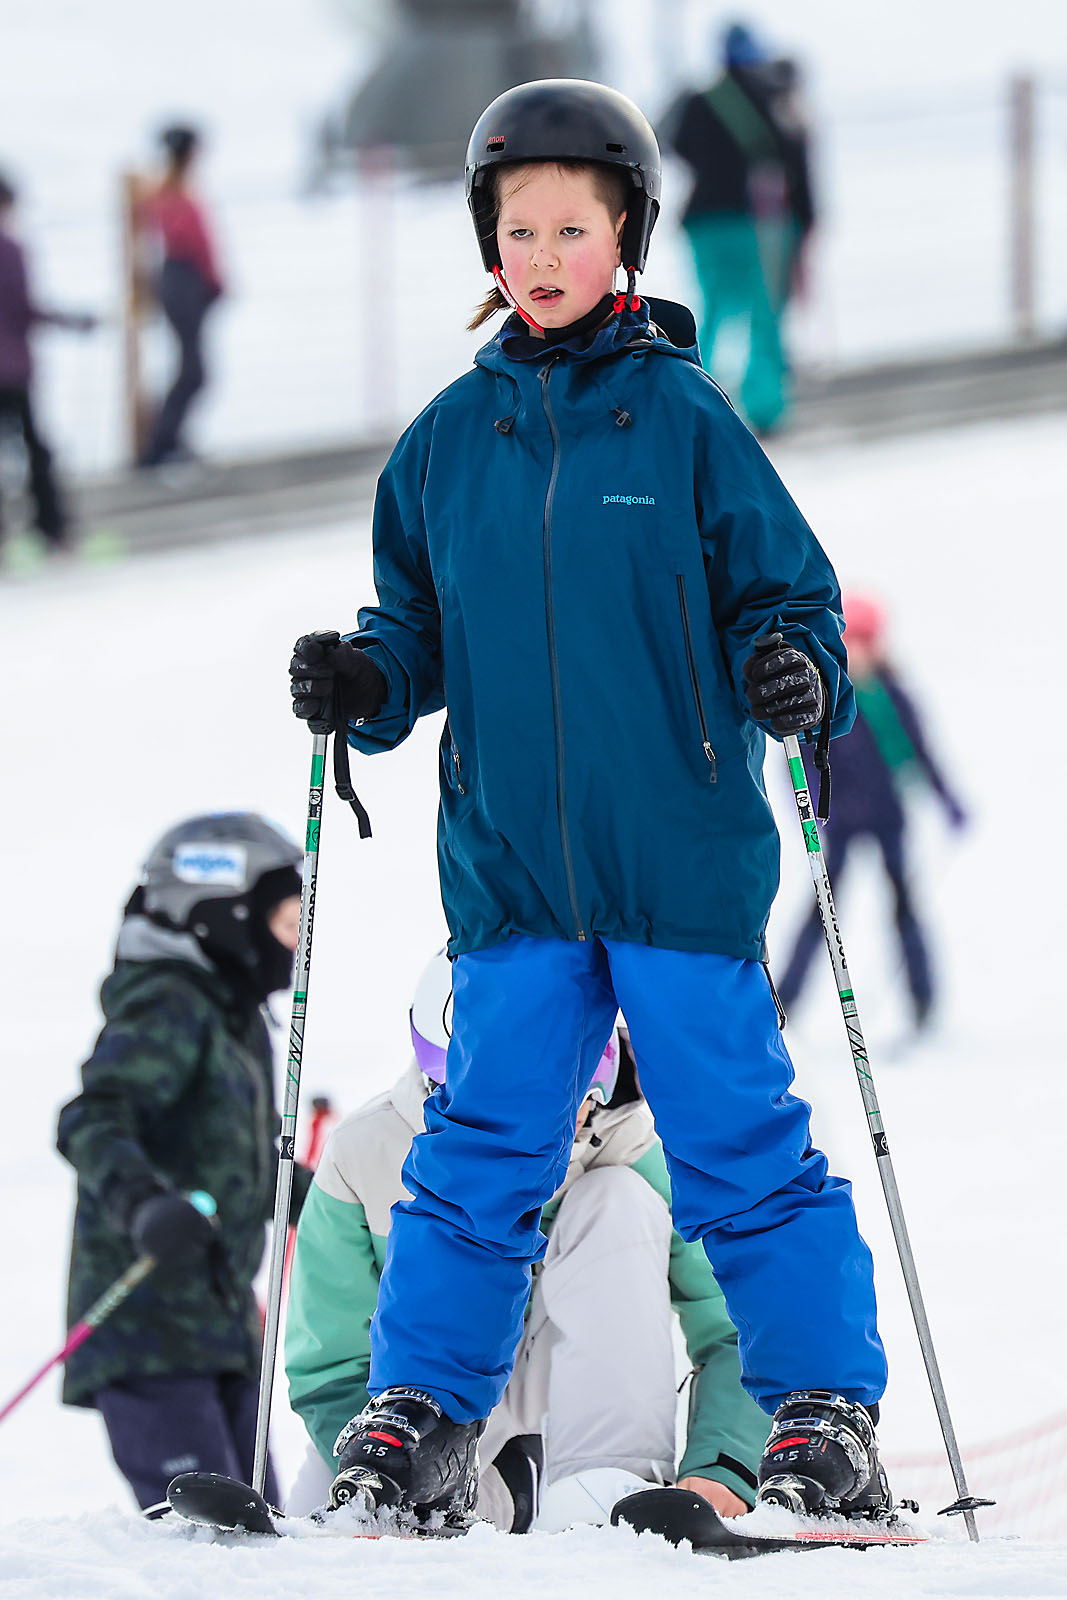 Oliver school skiing calgary photographer sergei belski photo